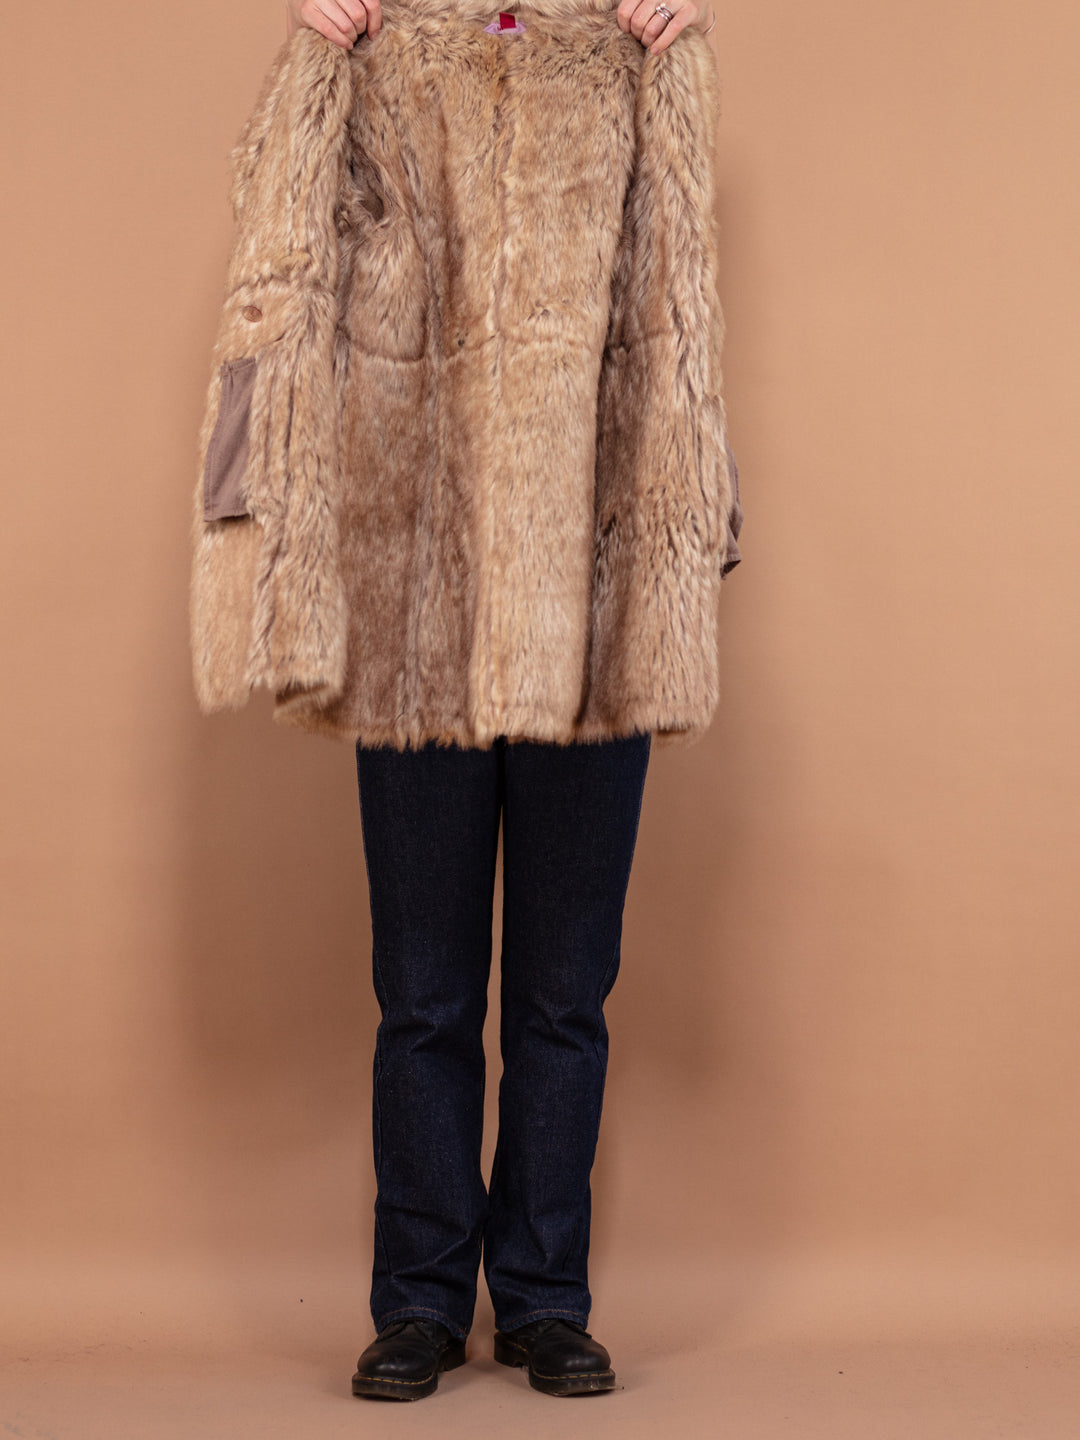 Y2K Penny Lane Style Coat, Size Medium, Vintage Faux Fur Trim Coat, Taupe Winter Coat, 00's Women Vegan Suede Sherpa Coat, Outerwear